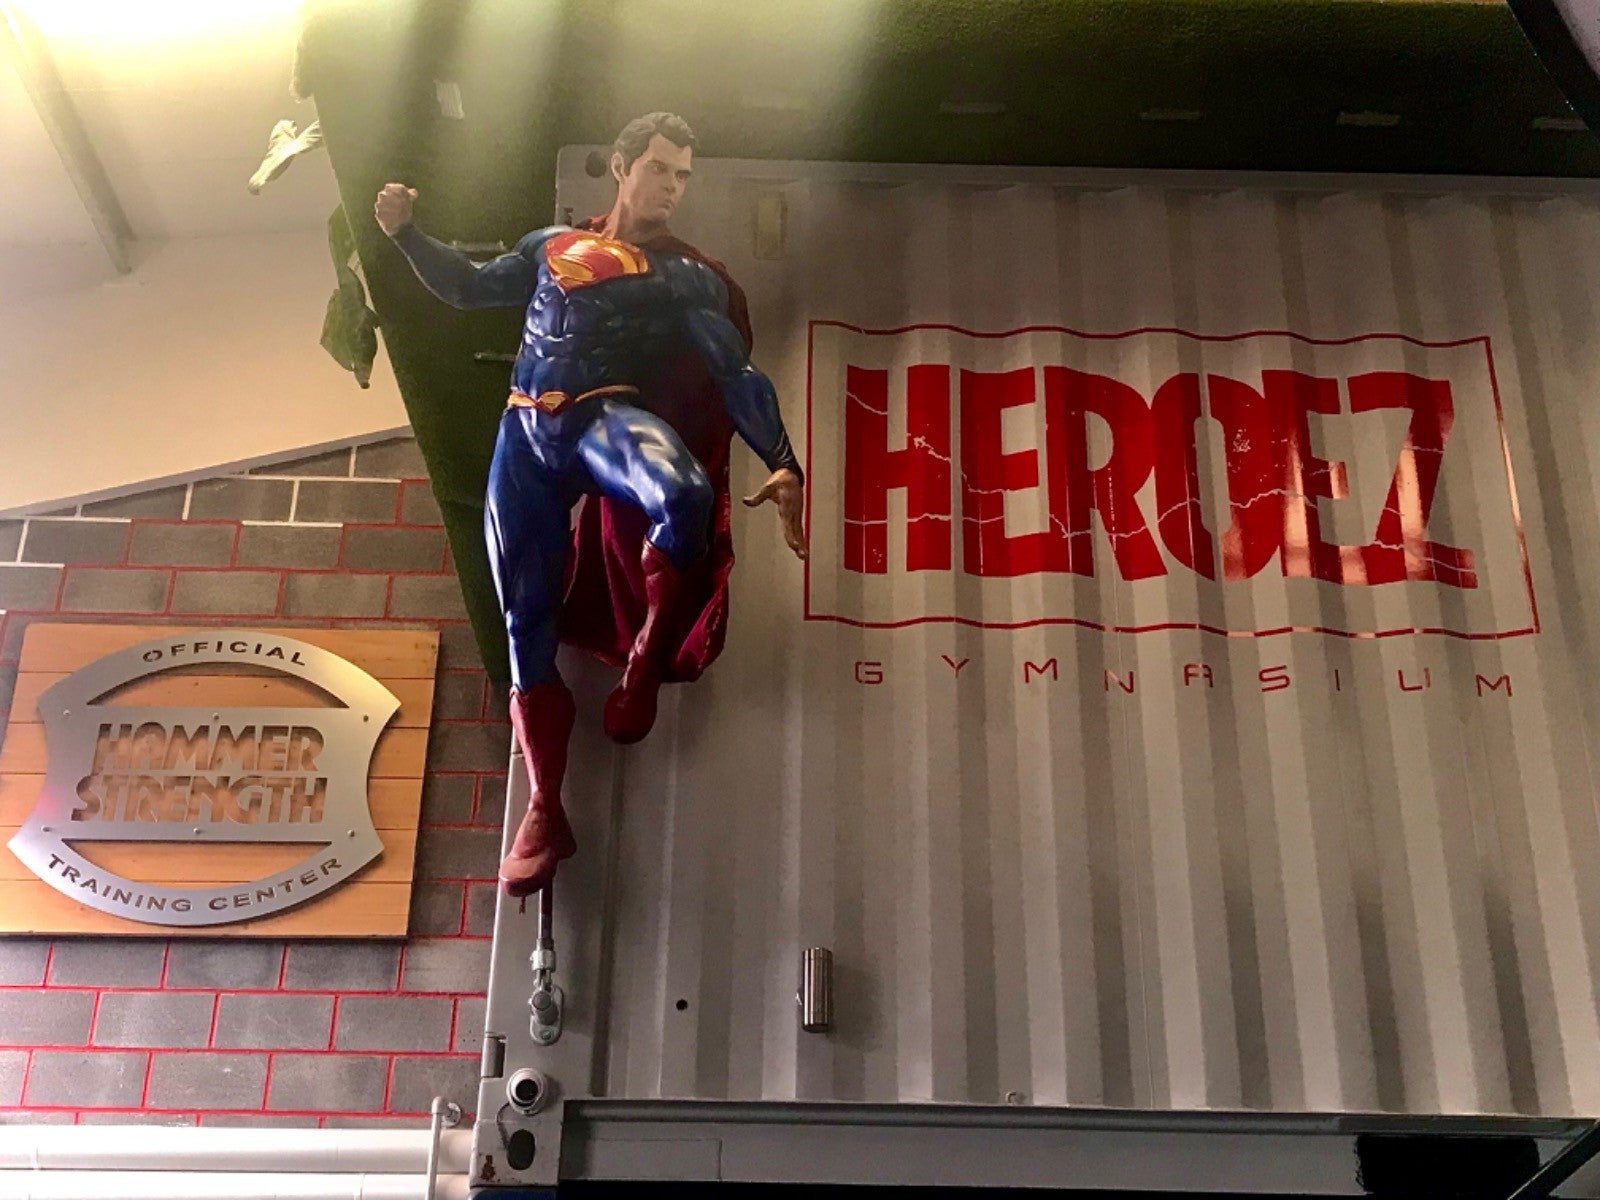 A lifesized figure of Superman keeps watch over Heroez gym